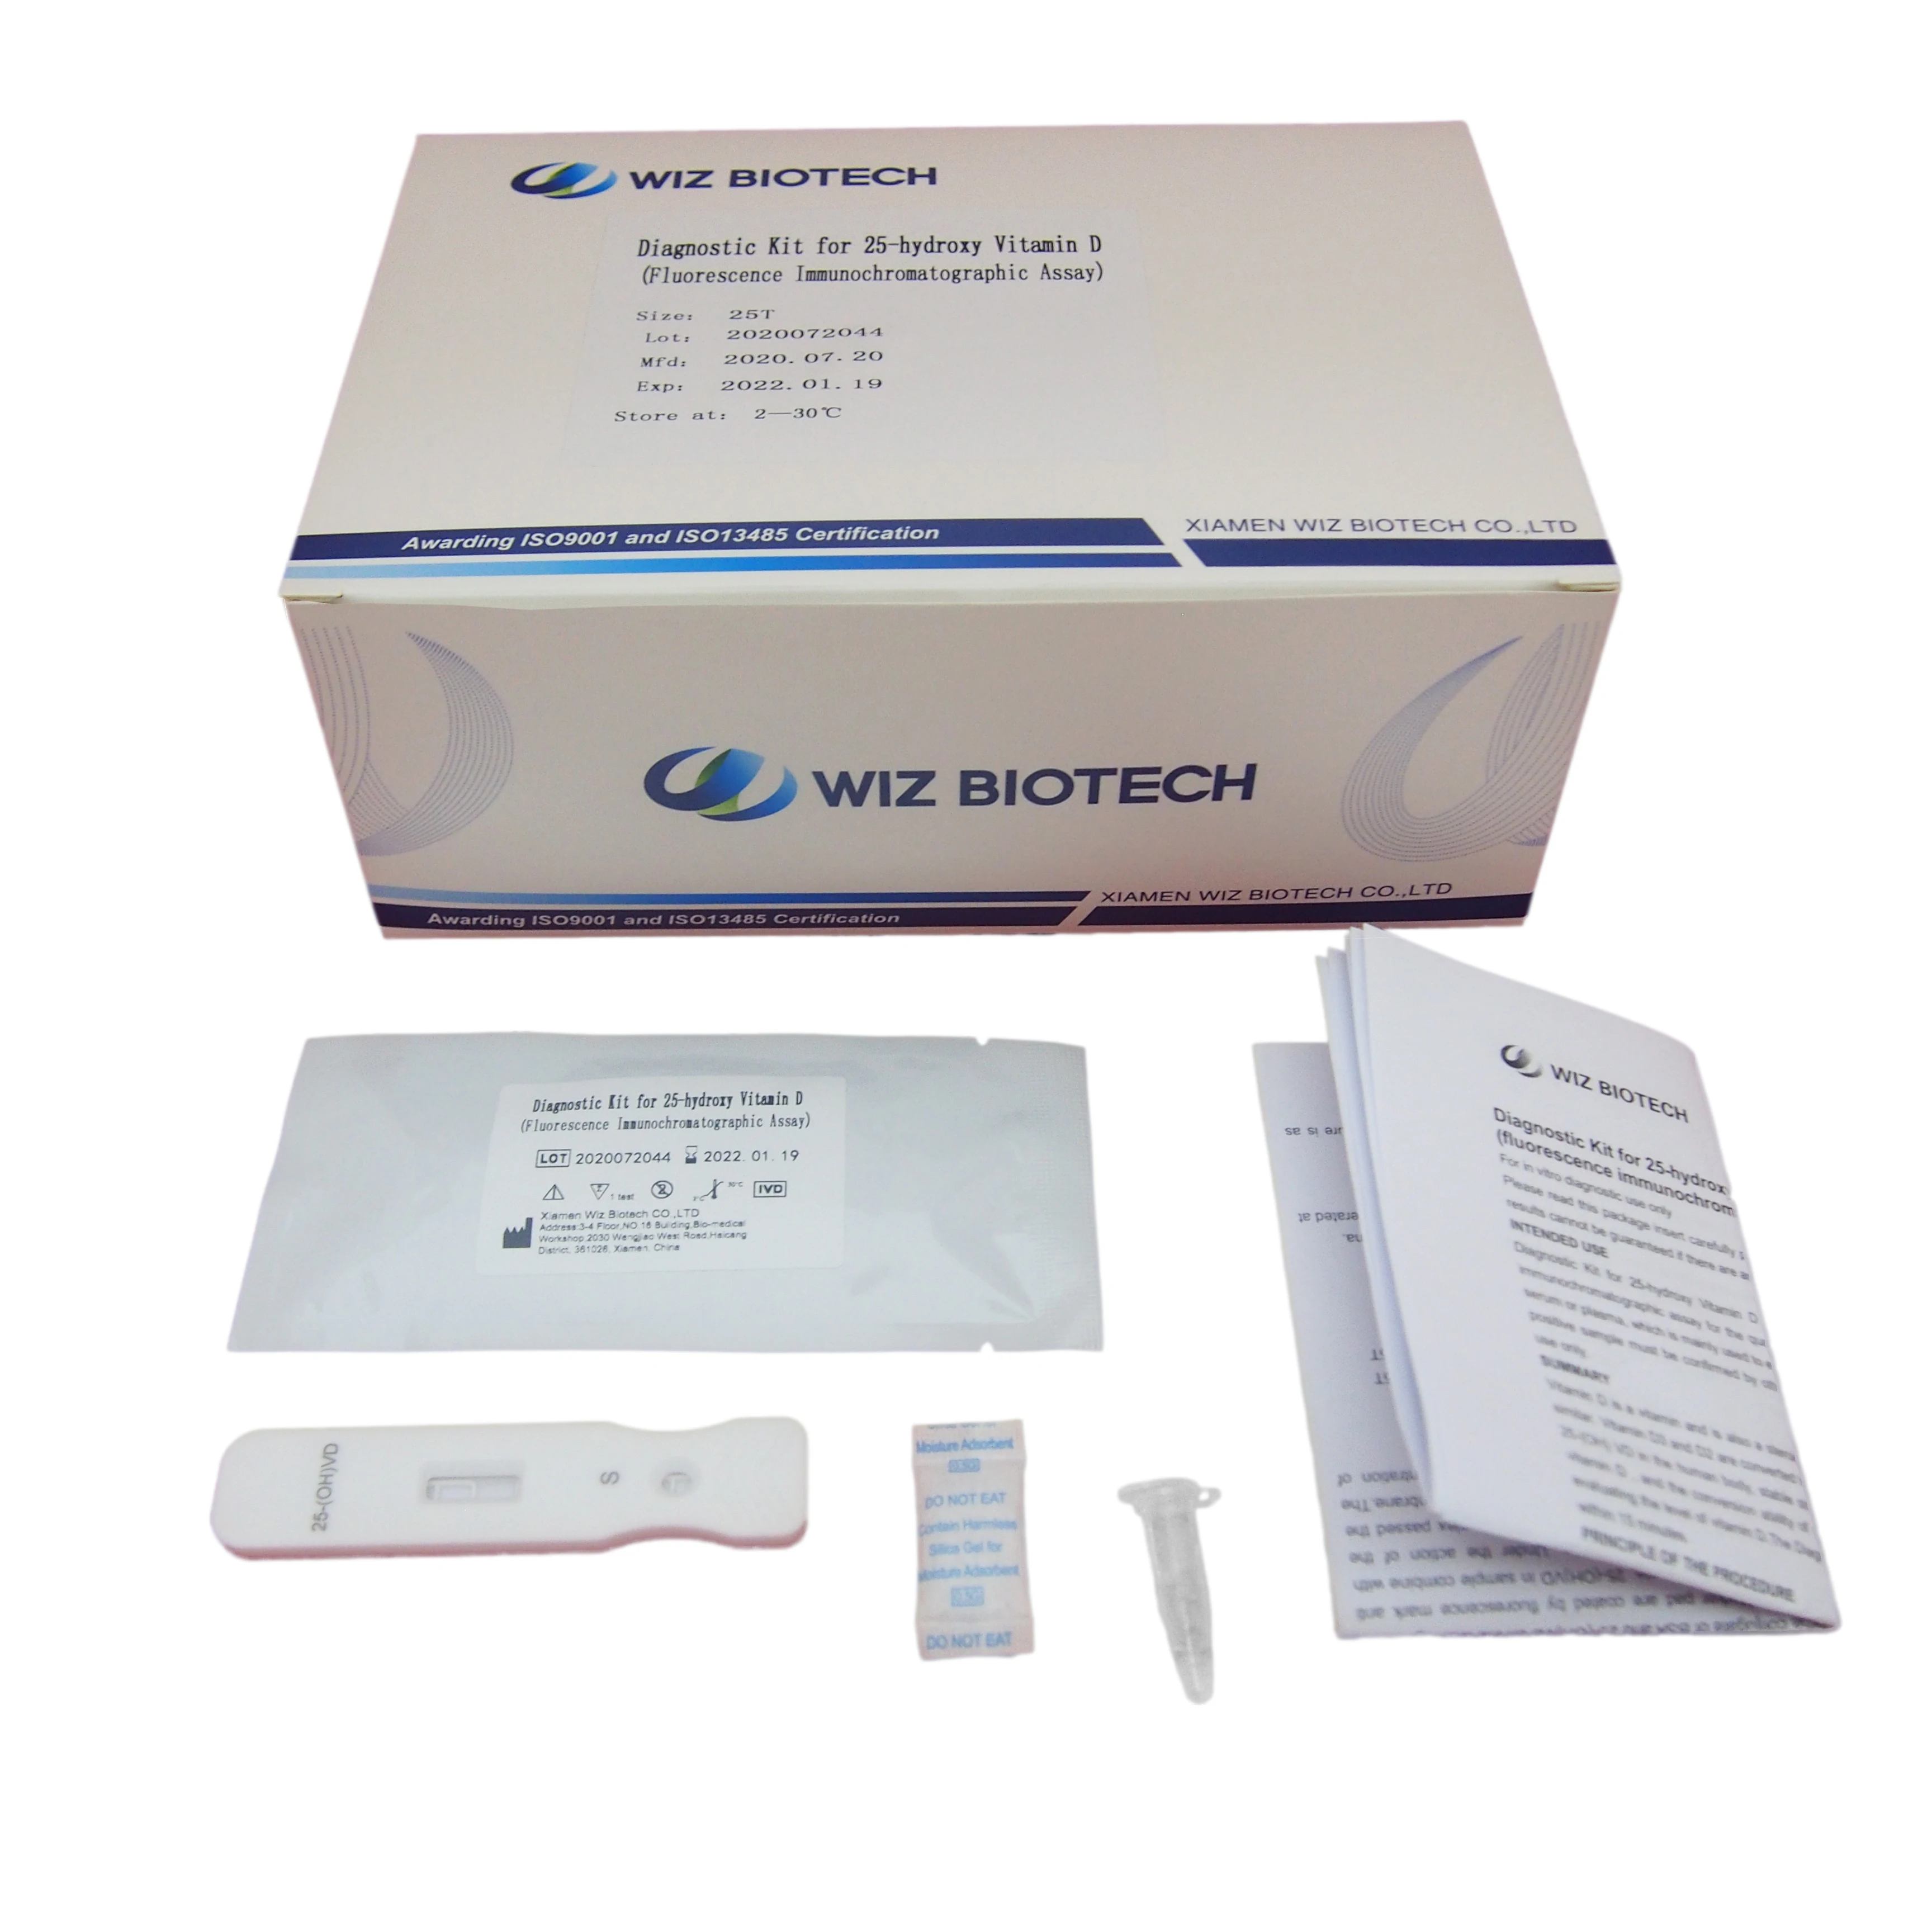 POCT reagent fluorescence Immunochromatographic vitamin D D3 rapid test kit (1600335416045)